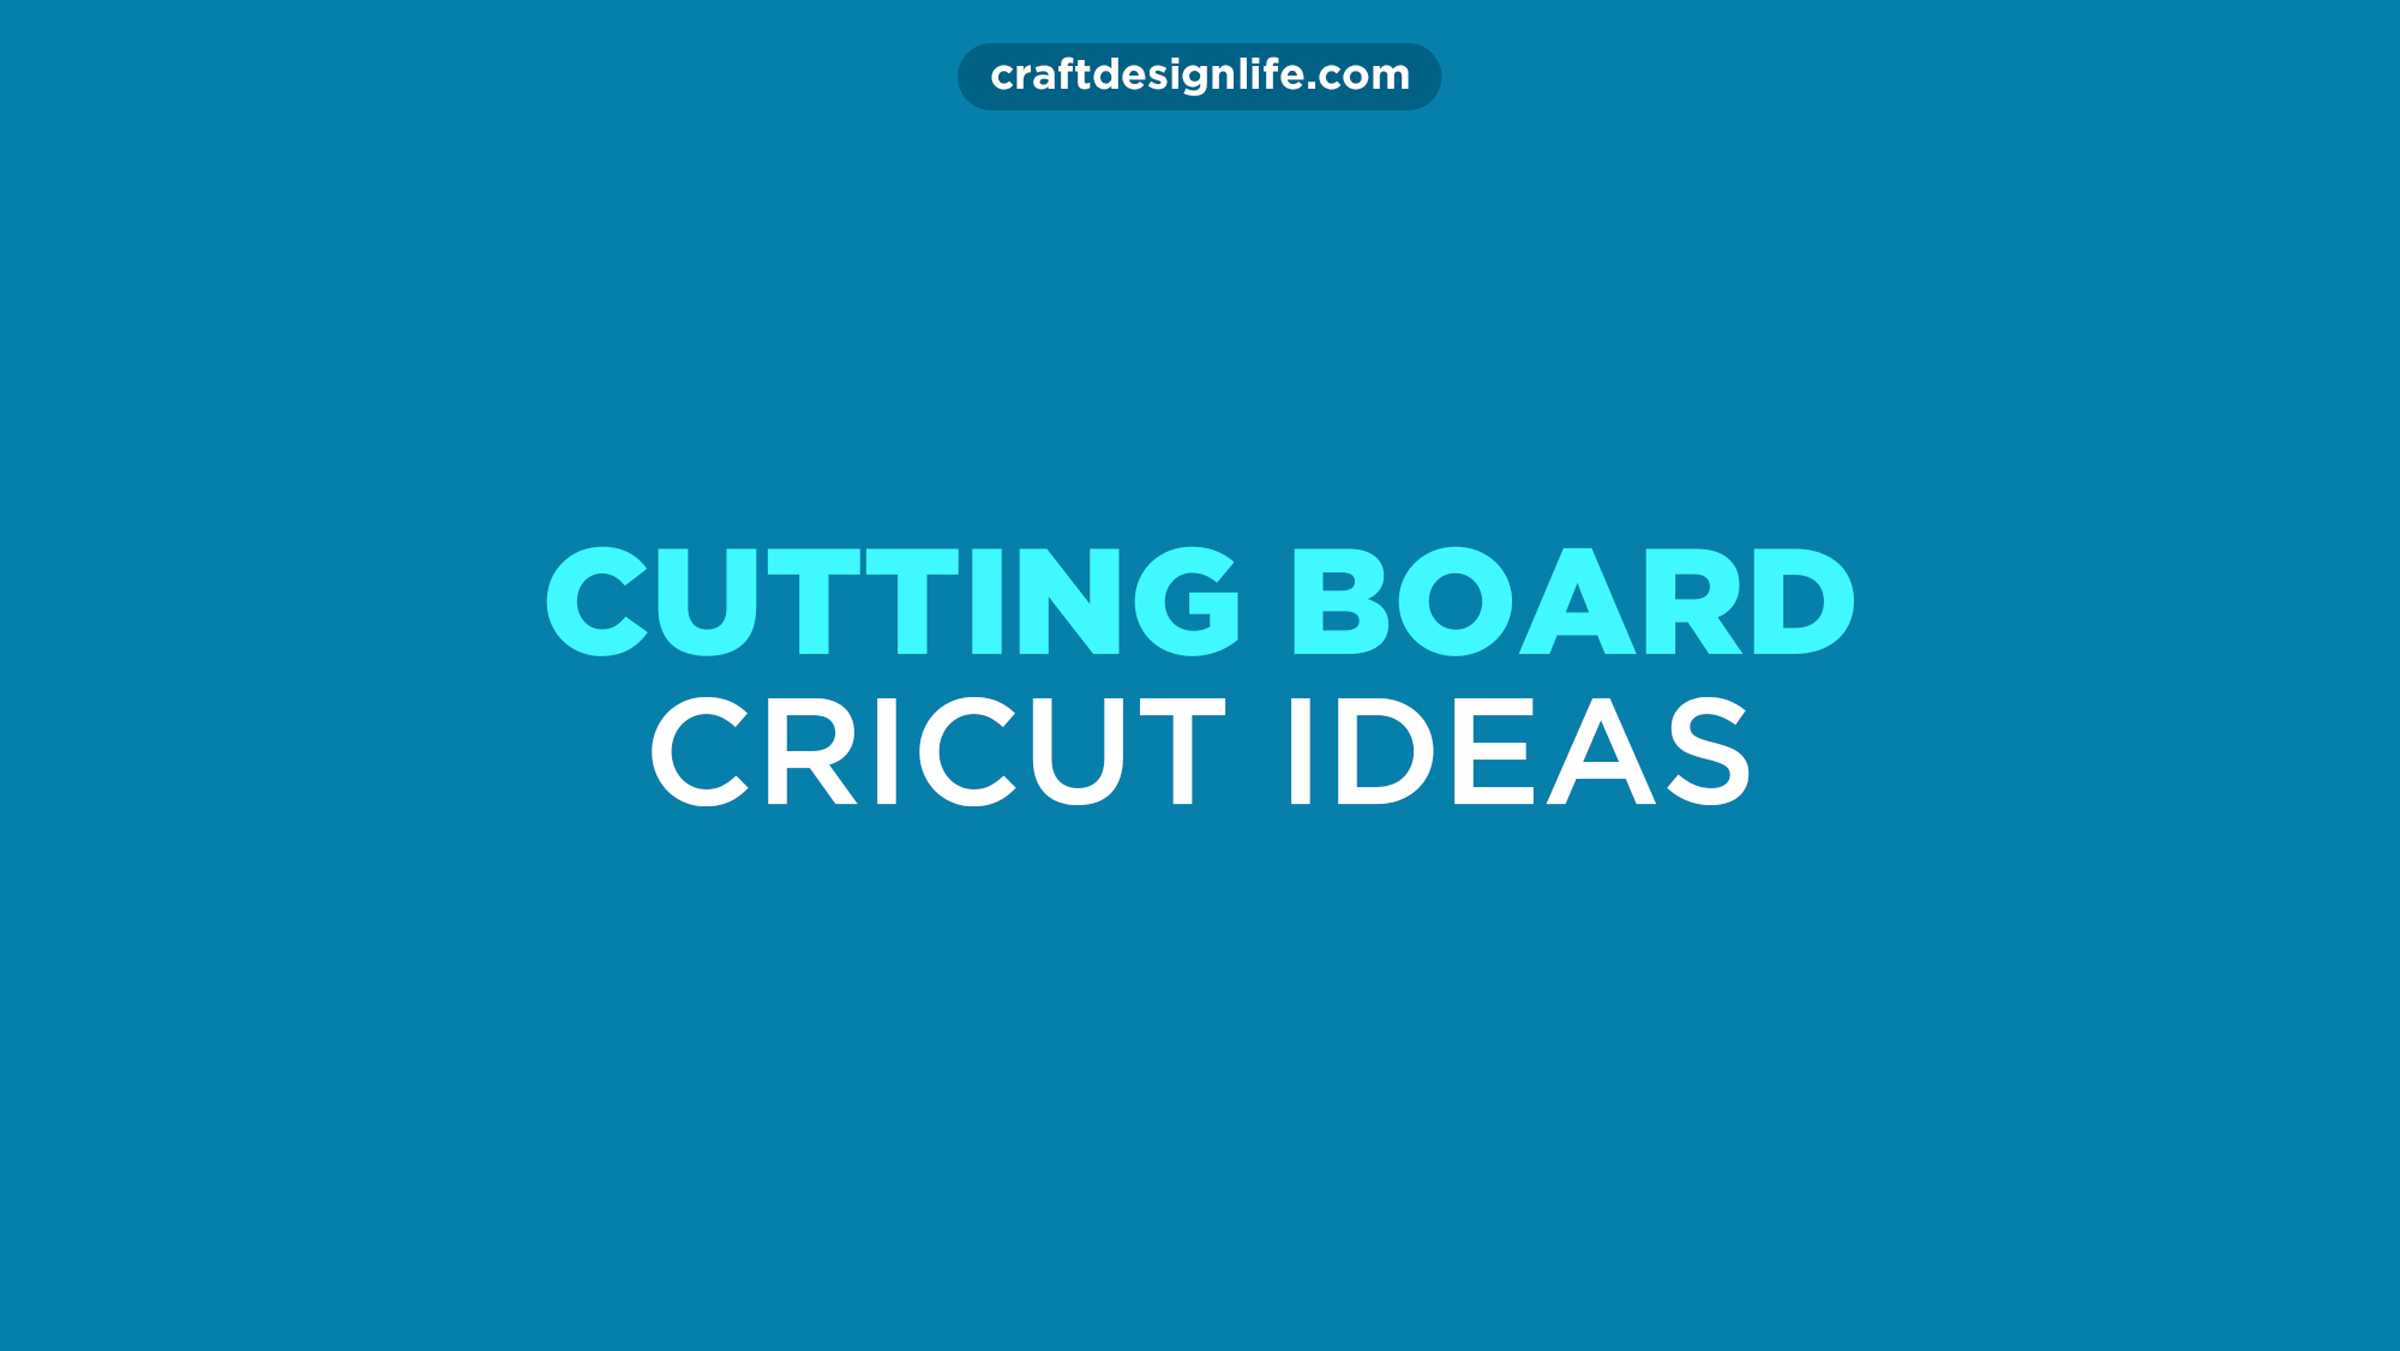 Cricut Cutting Board Ideas & Projects